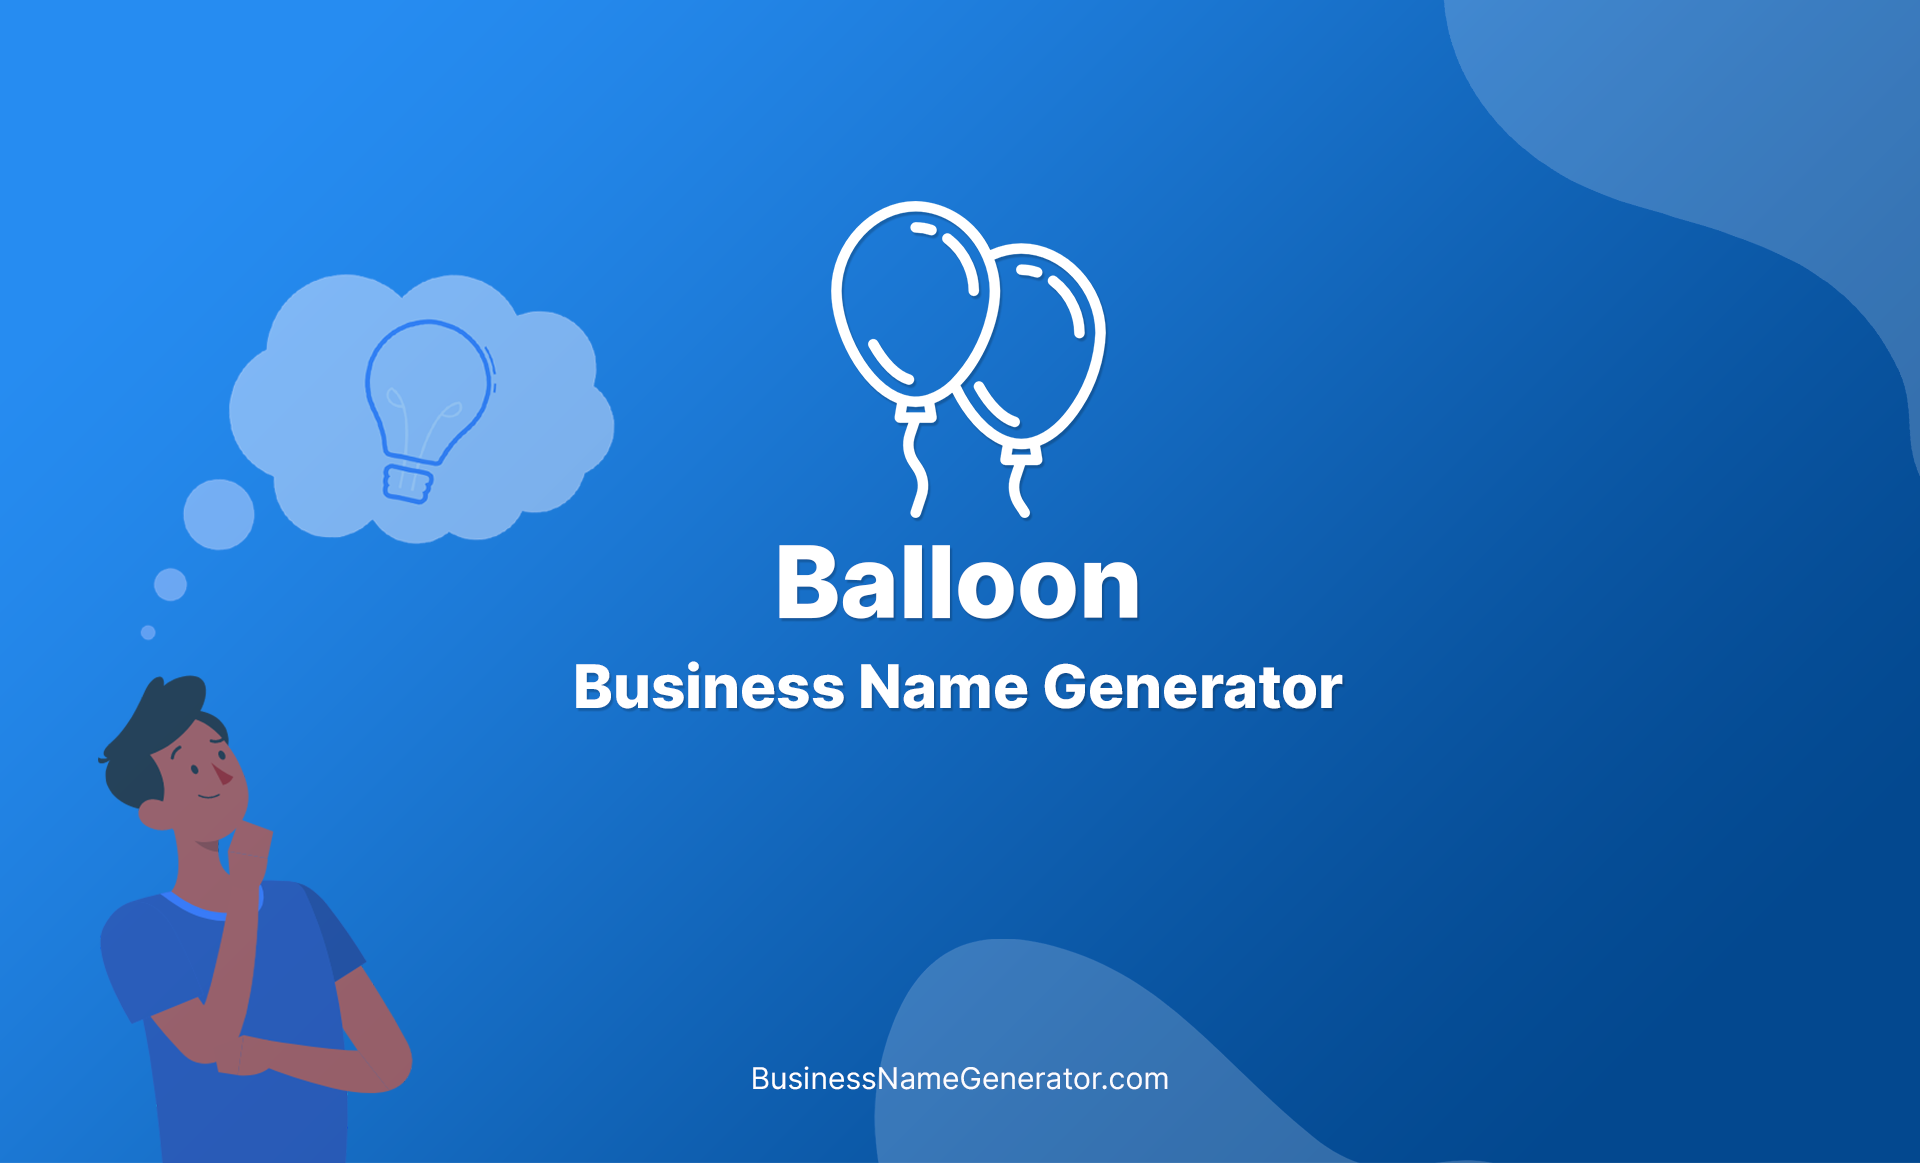 Balloon Business Name Generator